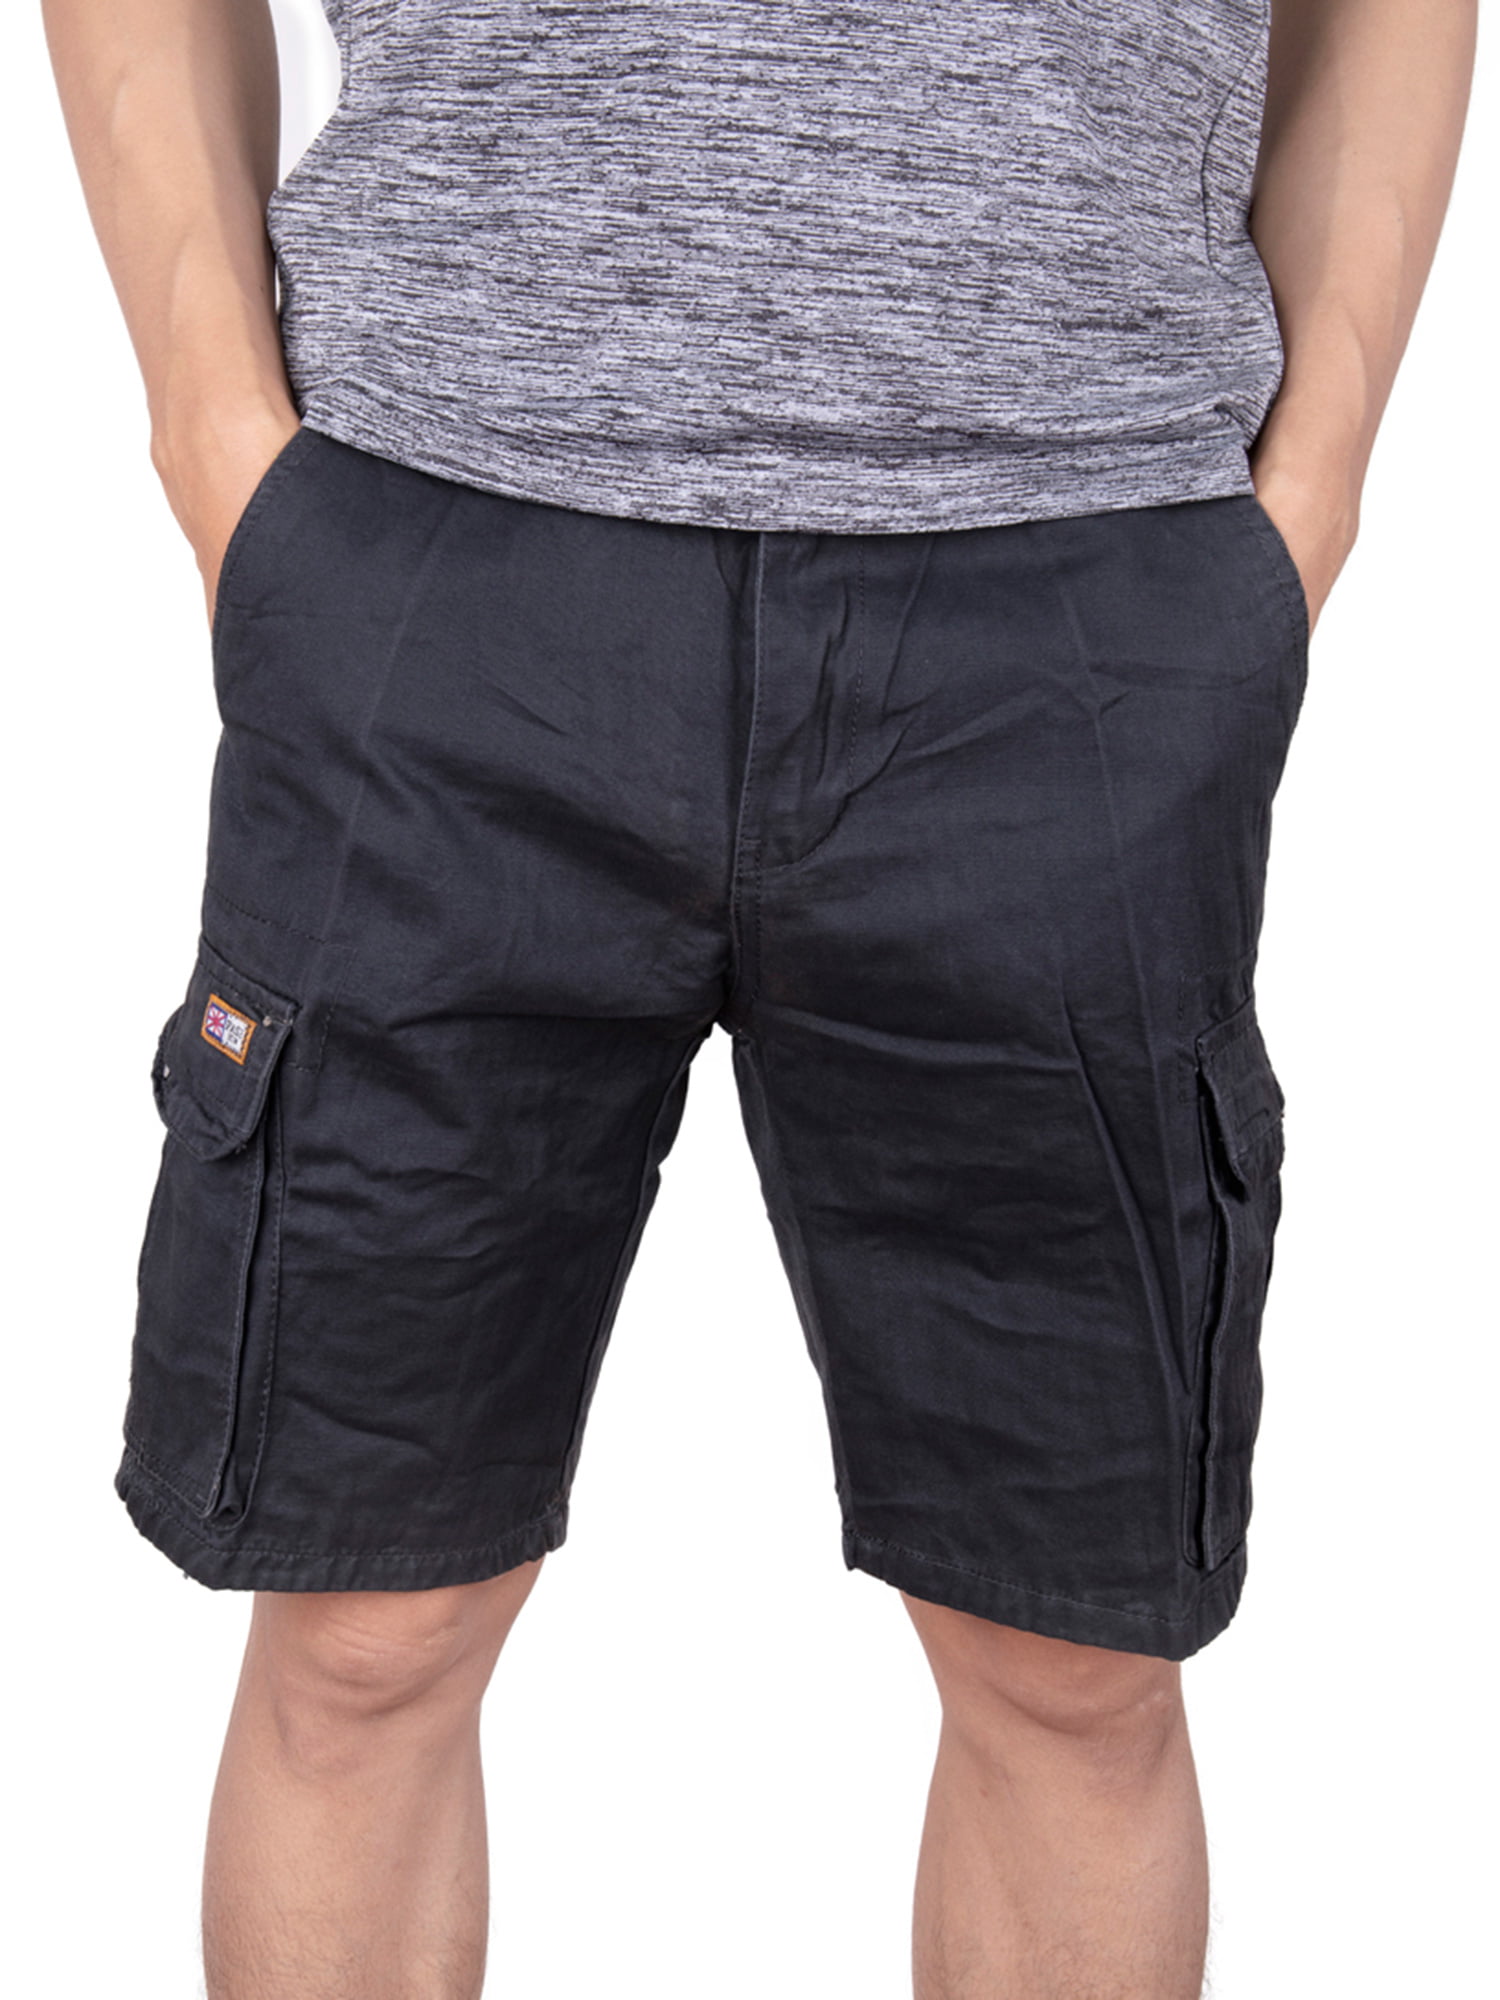 DIOMOR Fashion Plaid Multi Pockets Cargo Shorts for Men 9 Inseam Outdoor Knee Length Pants Khaki Camo Comfy Trunks 